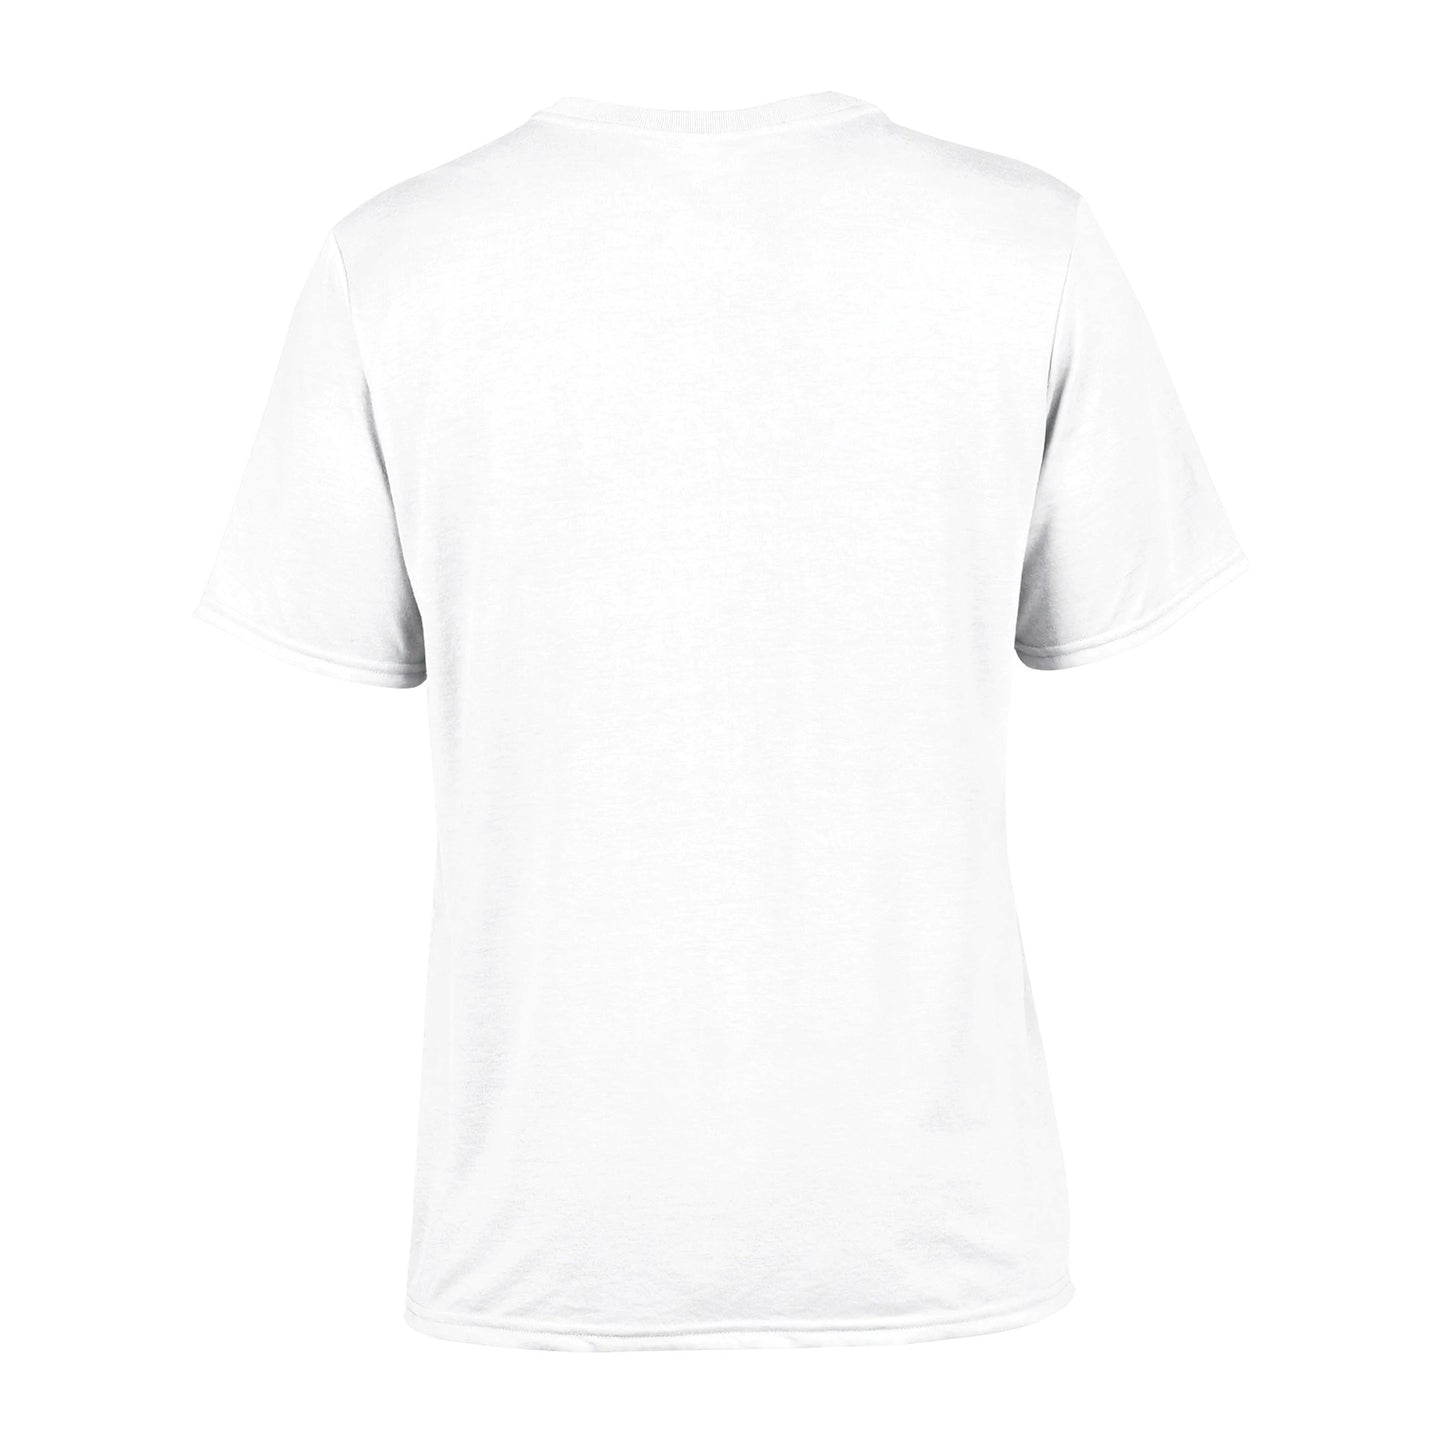 T-shirt tecnica per correre - Unisex -  Esco a Correre